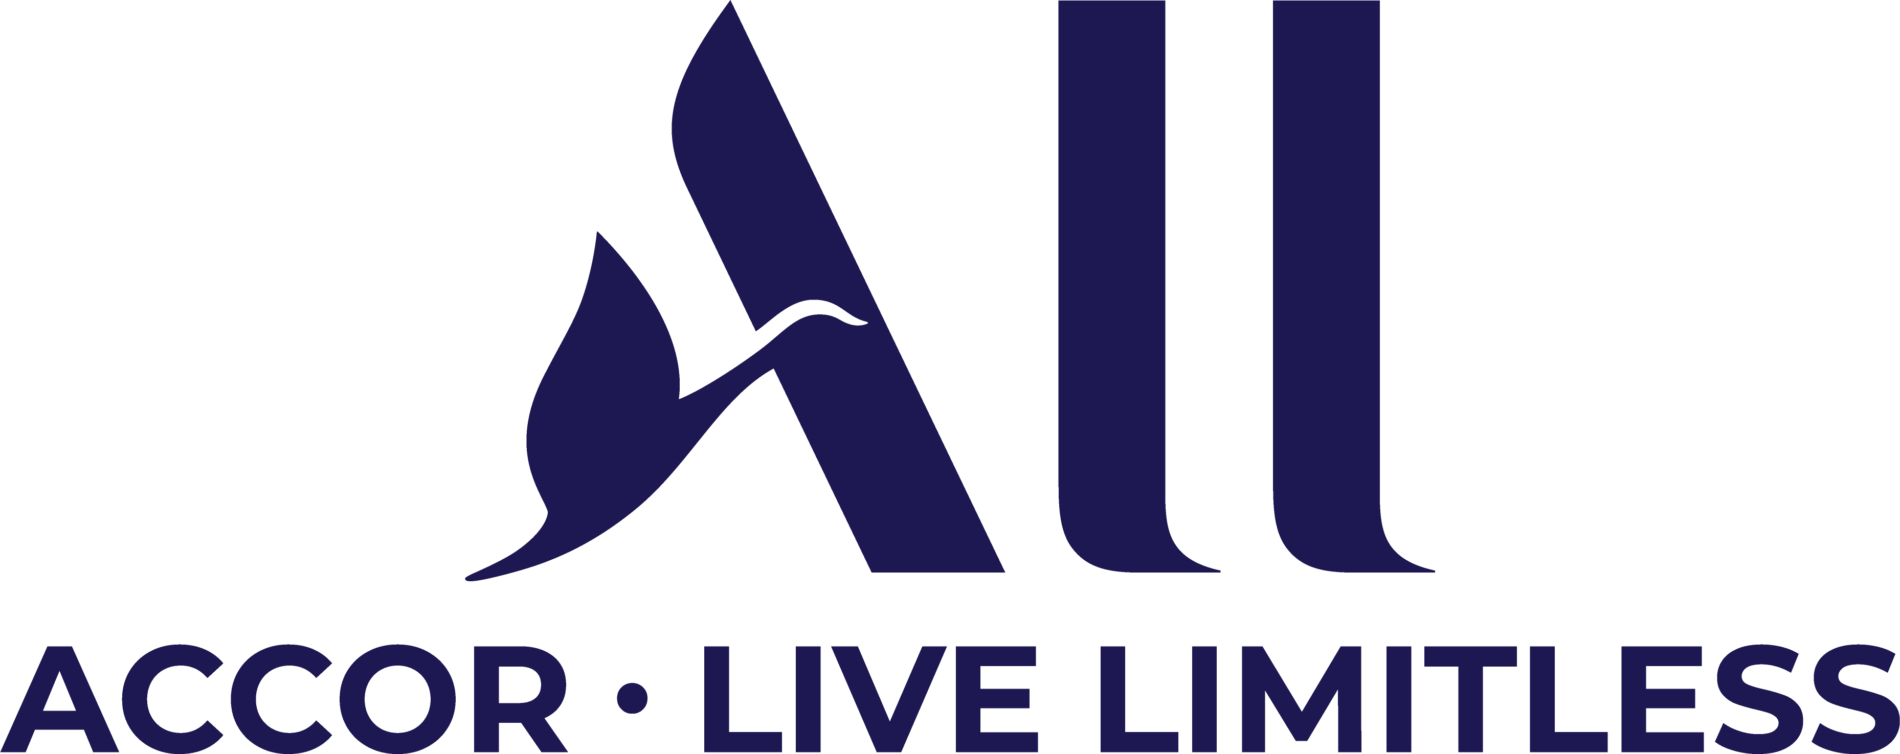 accor_live_limitless2022 logo